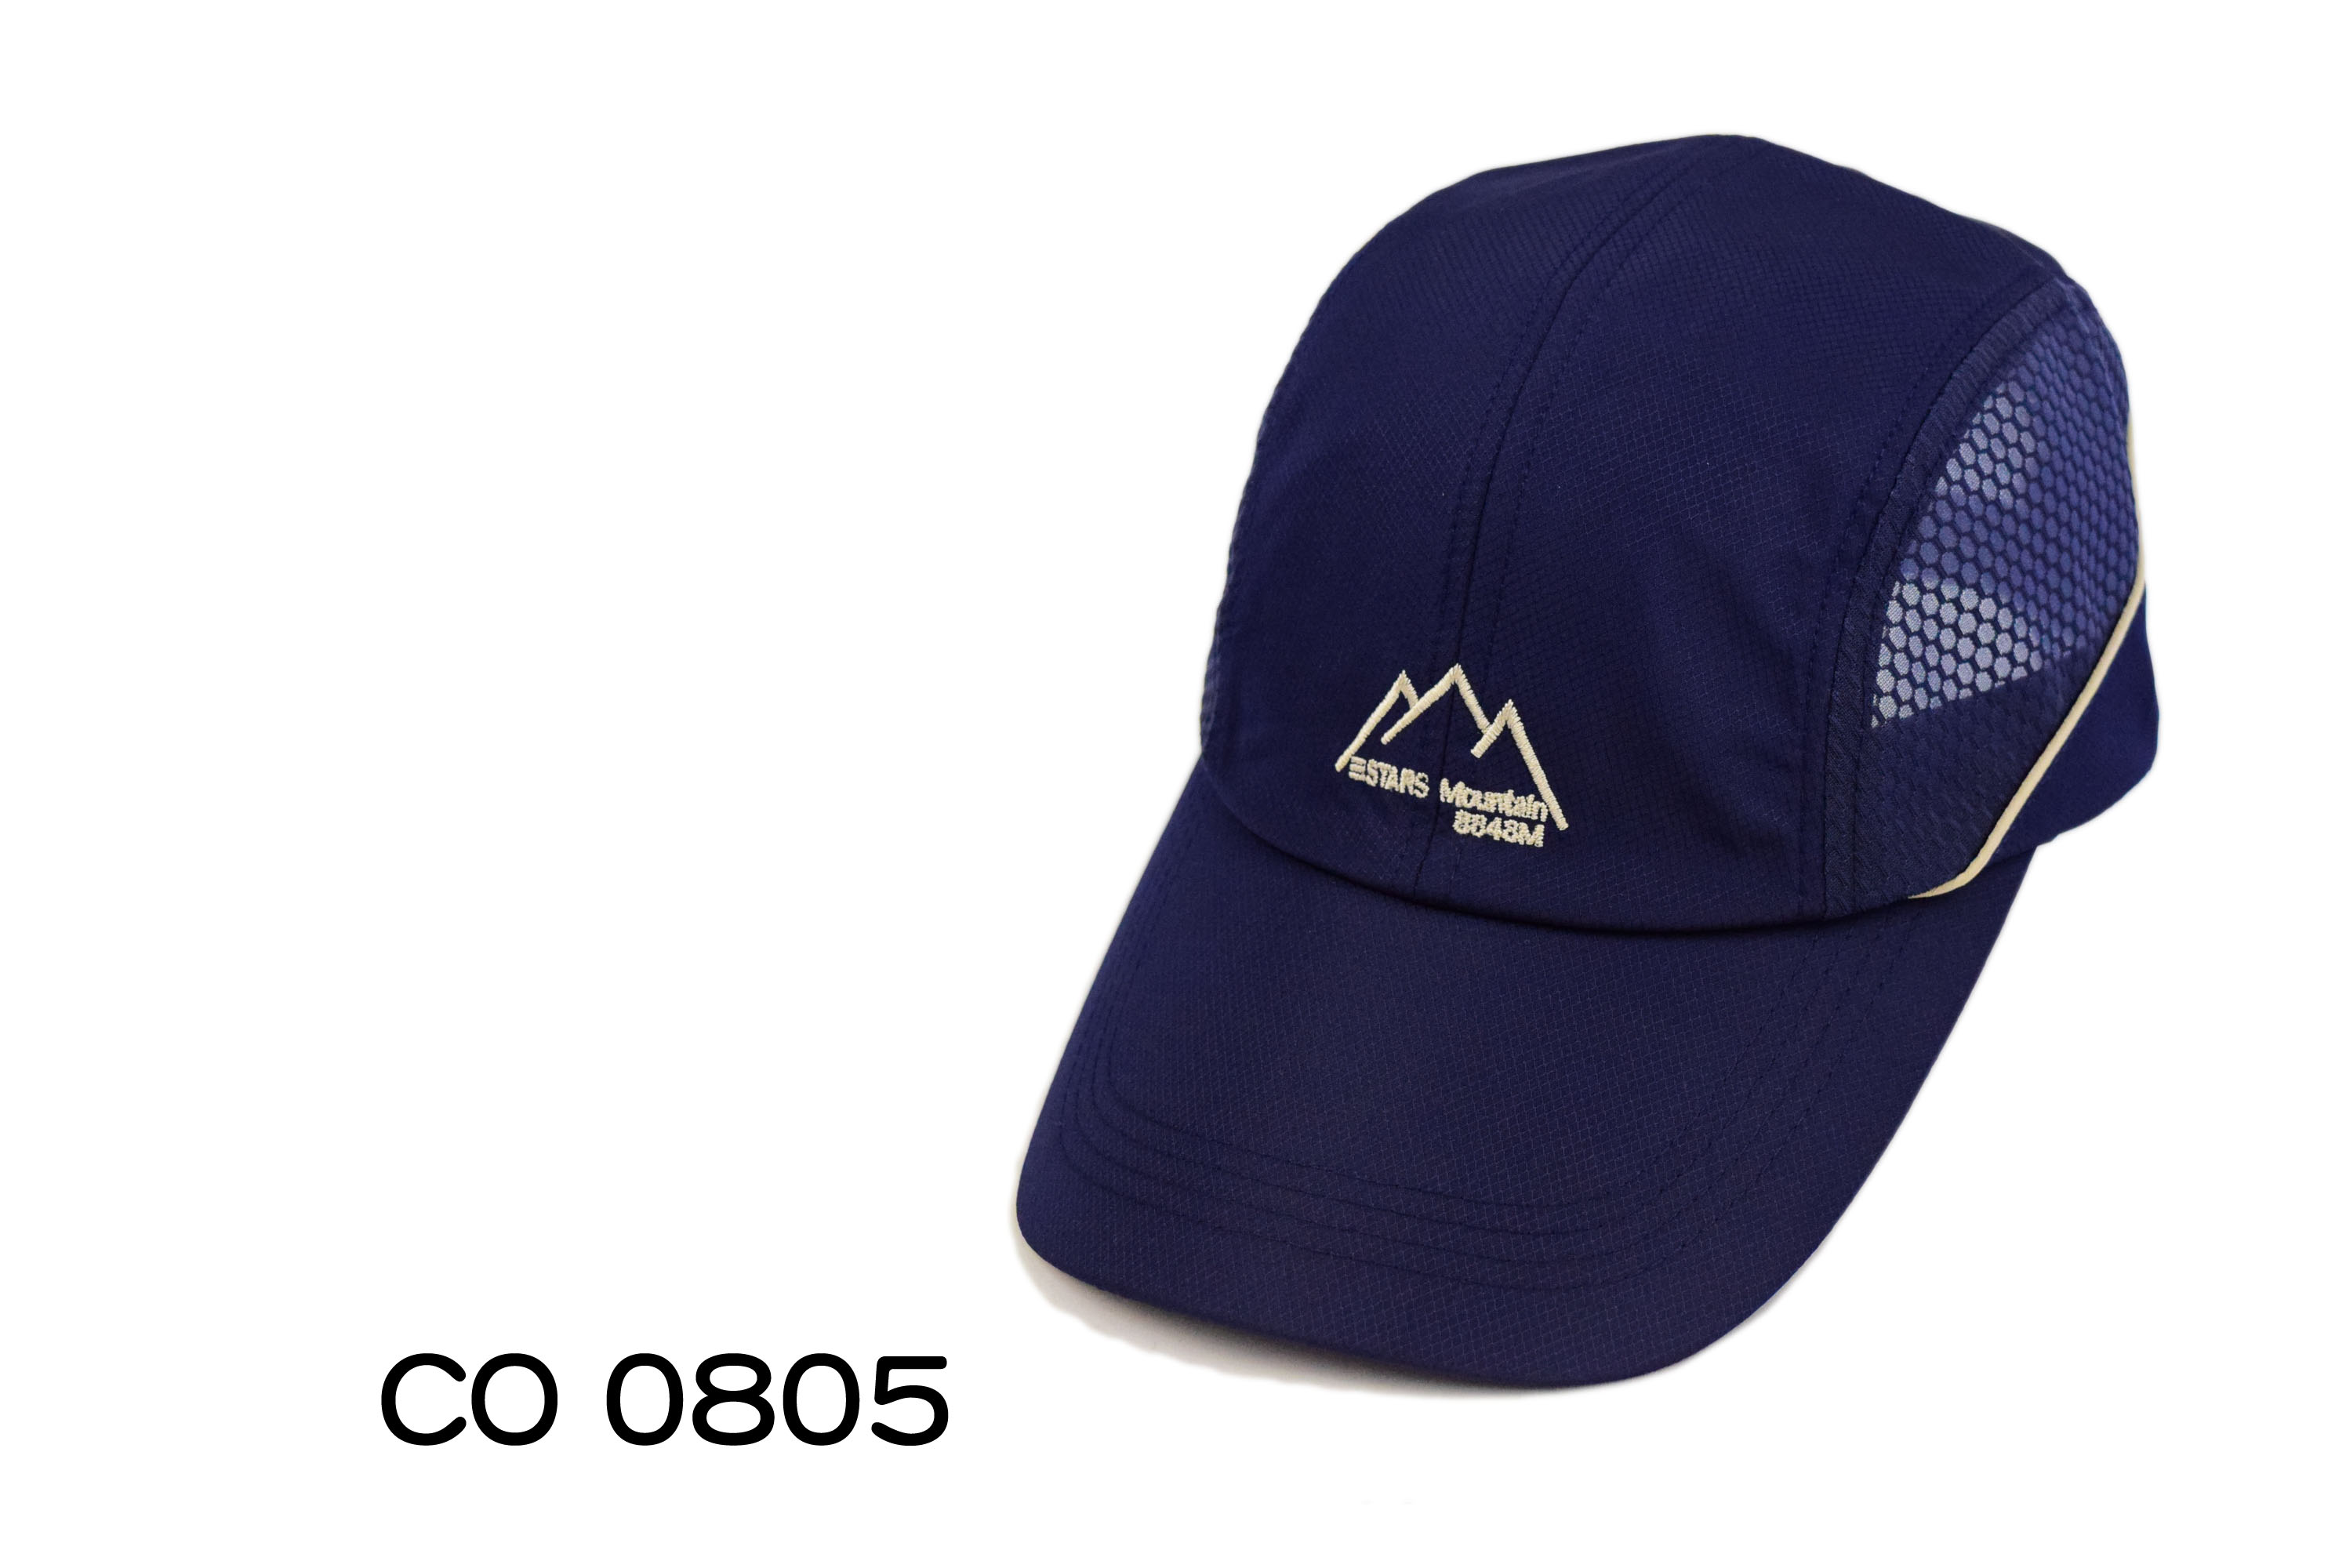 CO0805 抗UV聚酯纖維 雙色配球帽 三 STARS MOUNTAIN